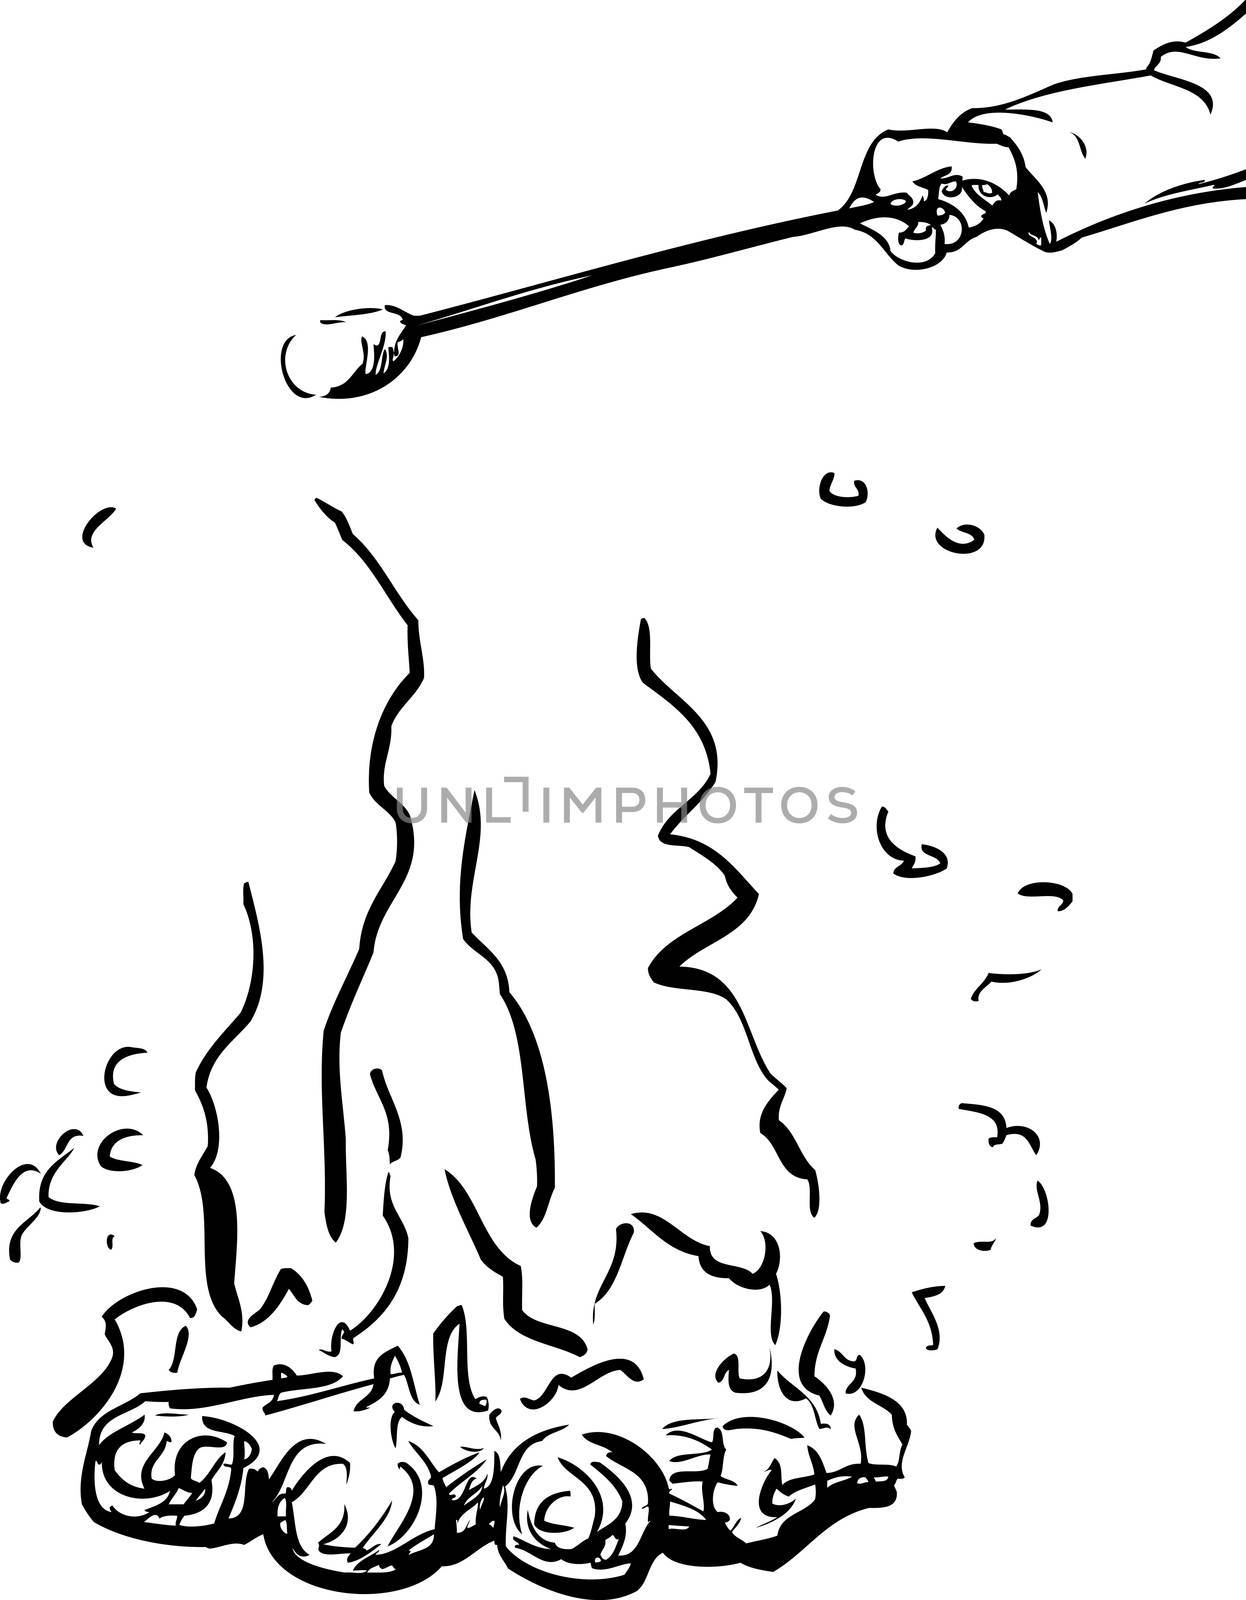 Illustration outline of hand holding marshmallow stick over single burning hot campfire